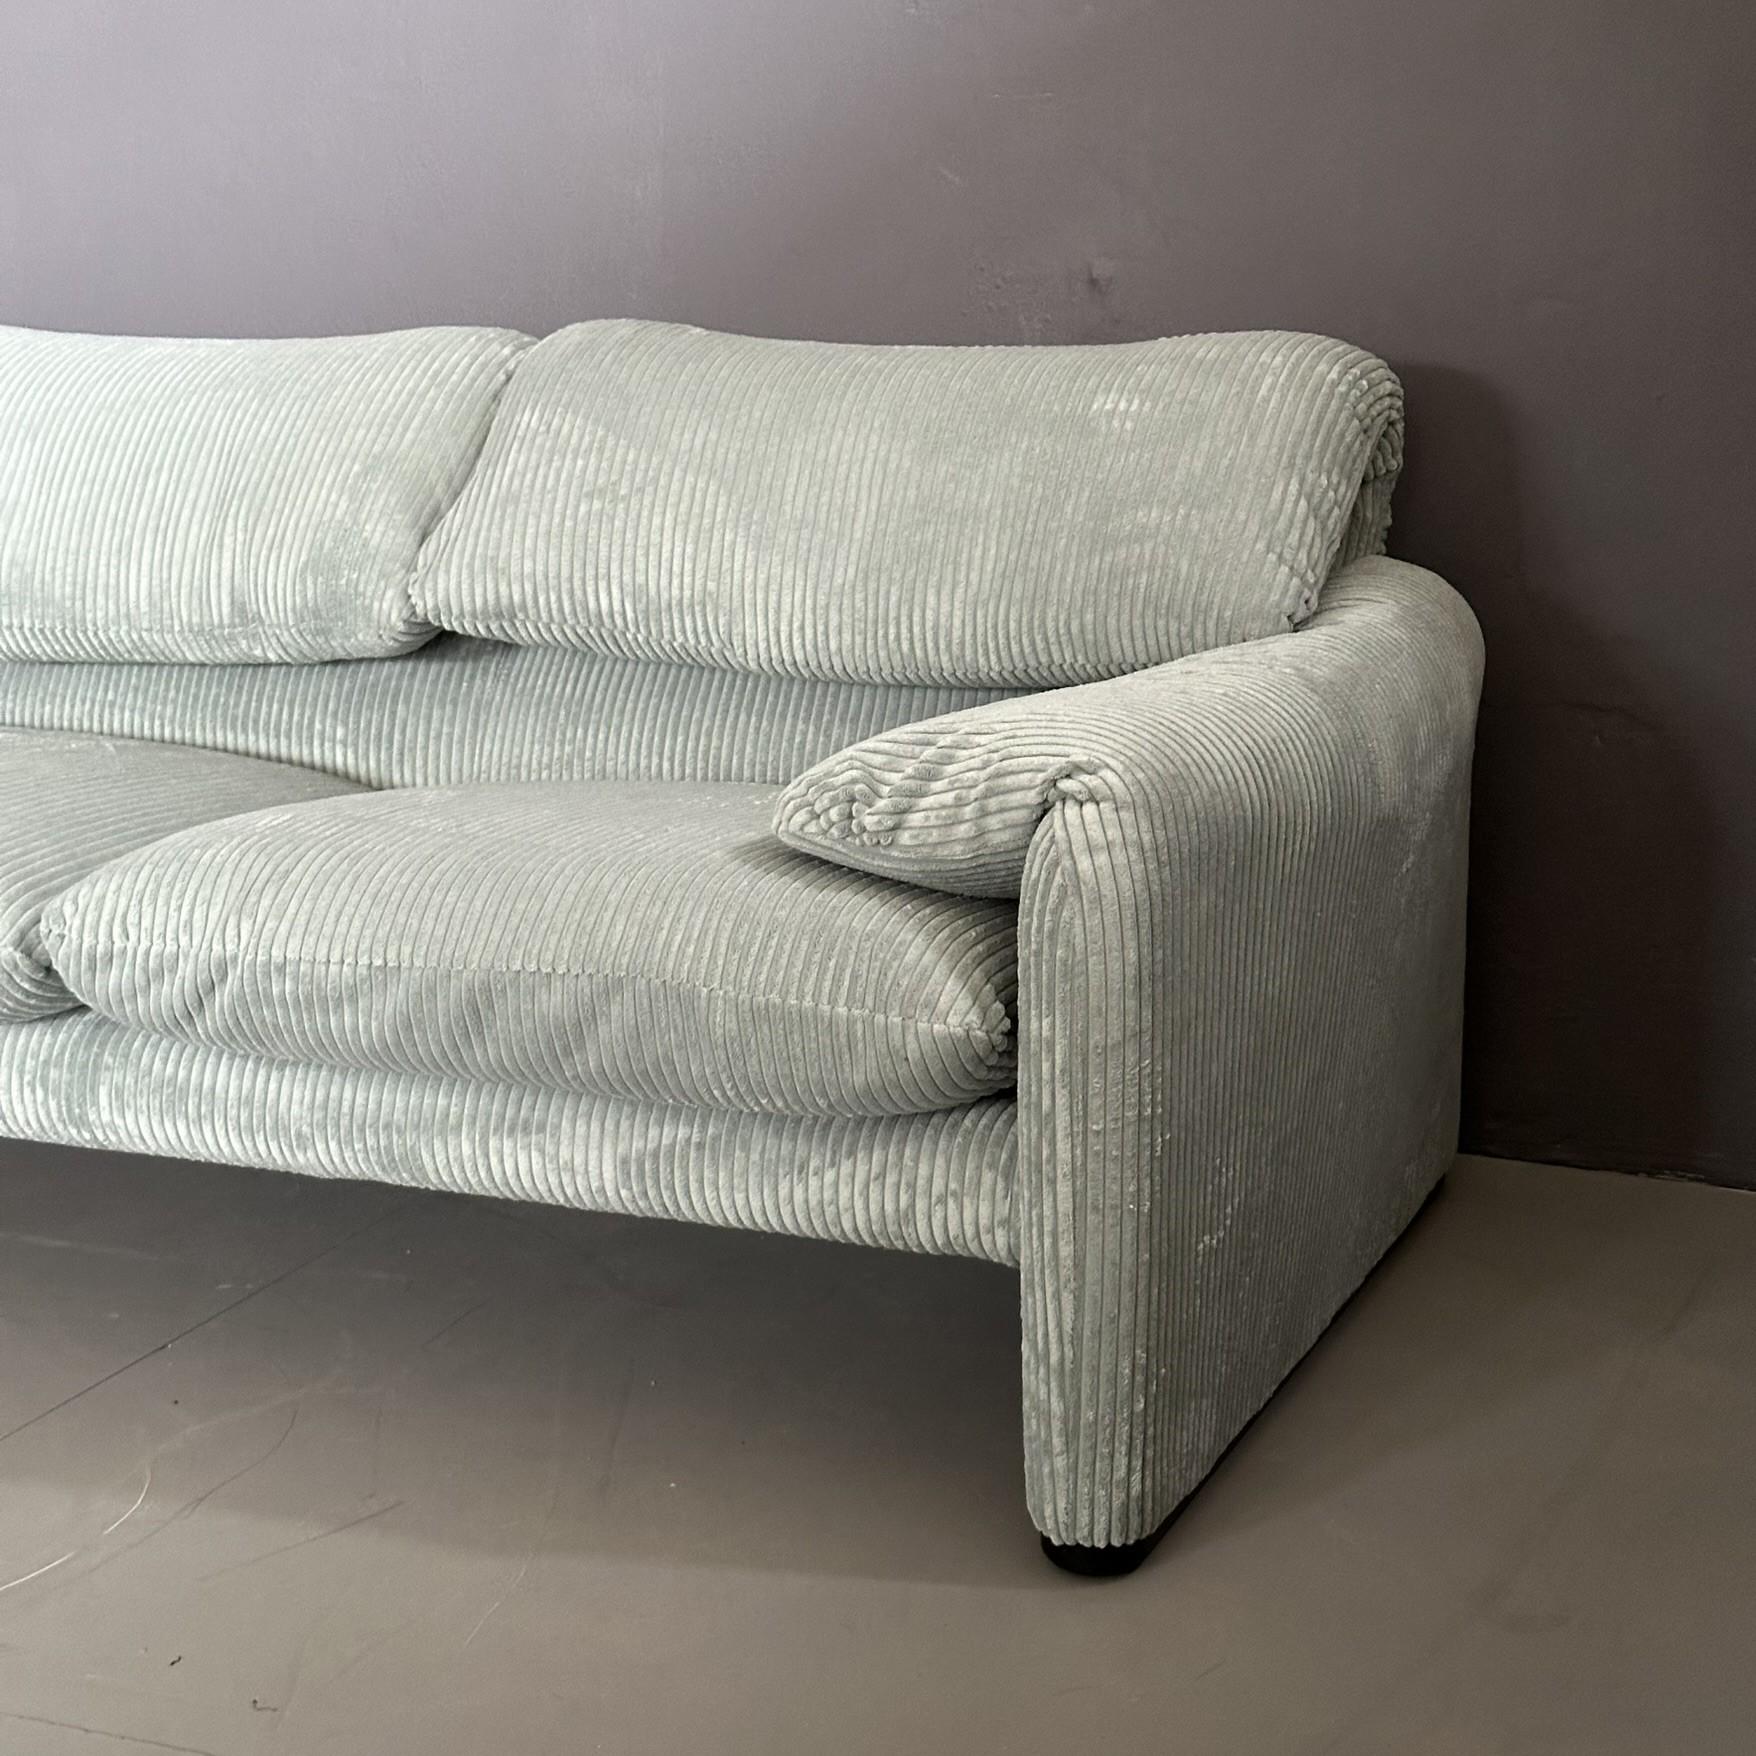 Fabric Maralunga three-seater sofa designed by Vico Magistretti for Cassina in the 1970 For Sale